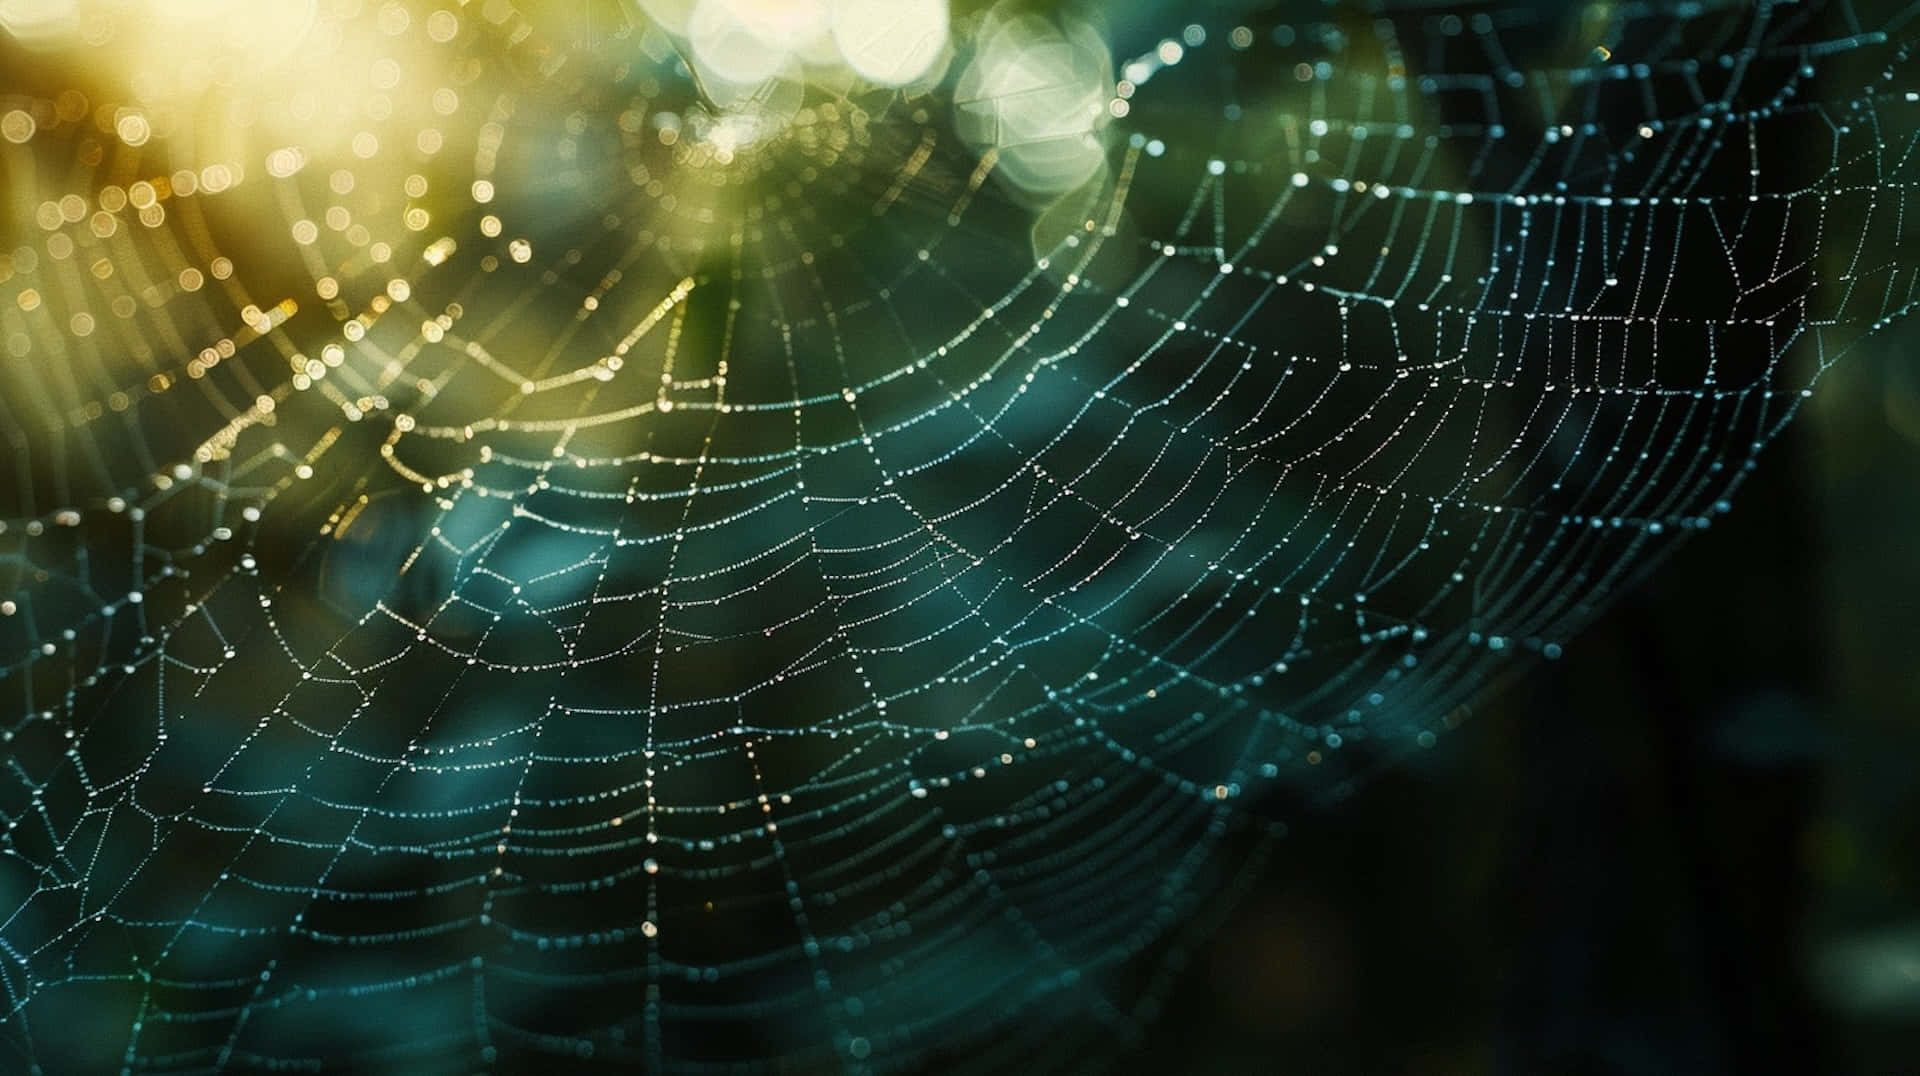 Dewy Spider Web Sunrise Wallpaper